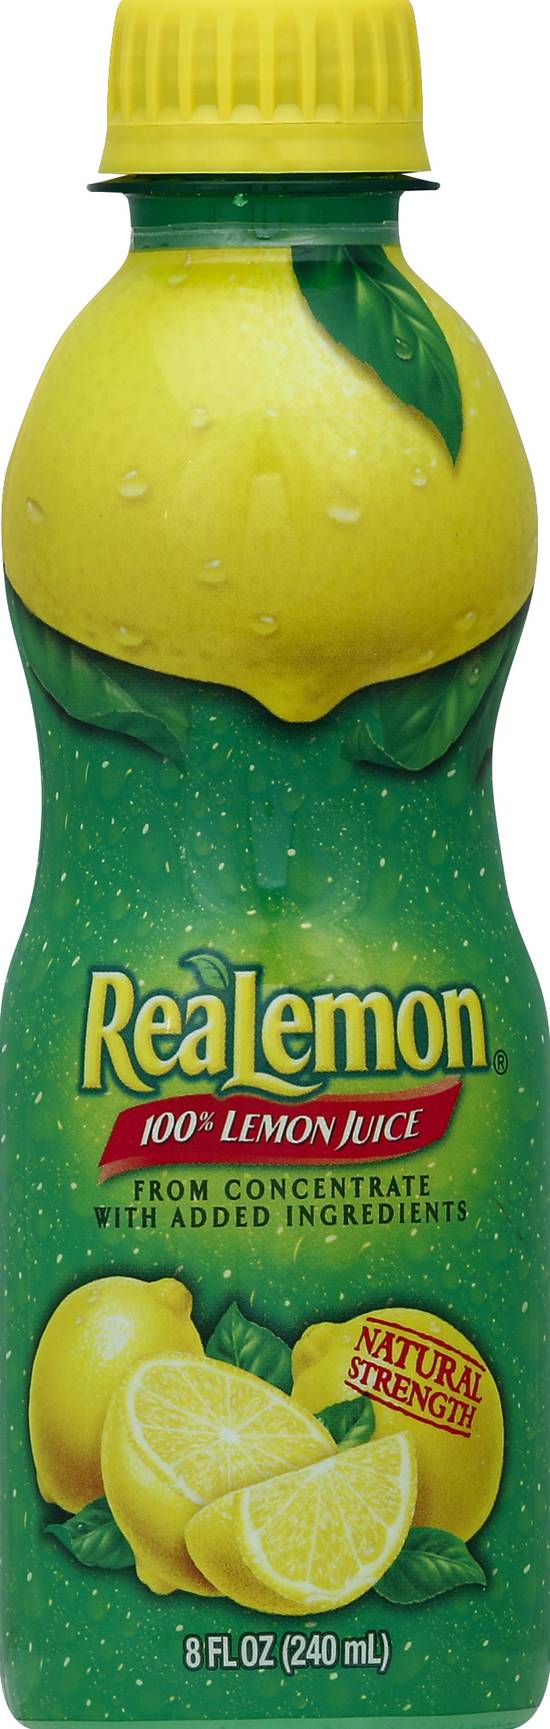 Realemon 100% Lemon Juice (8 fl oz)